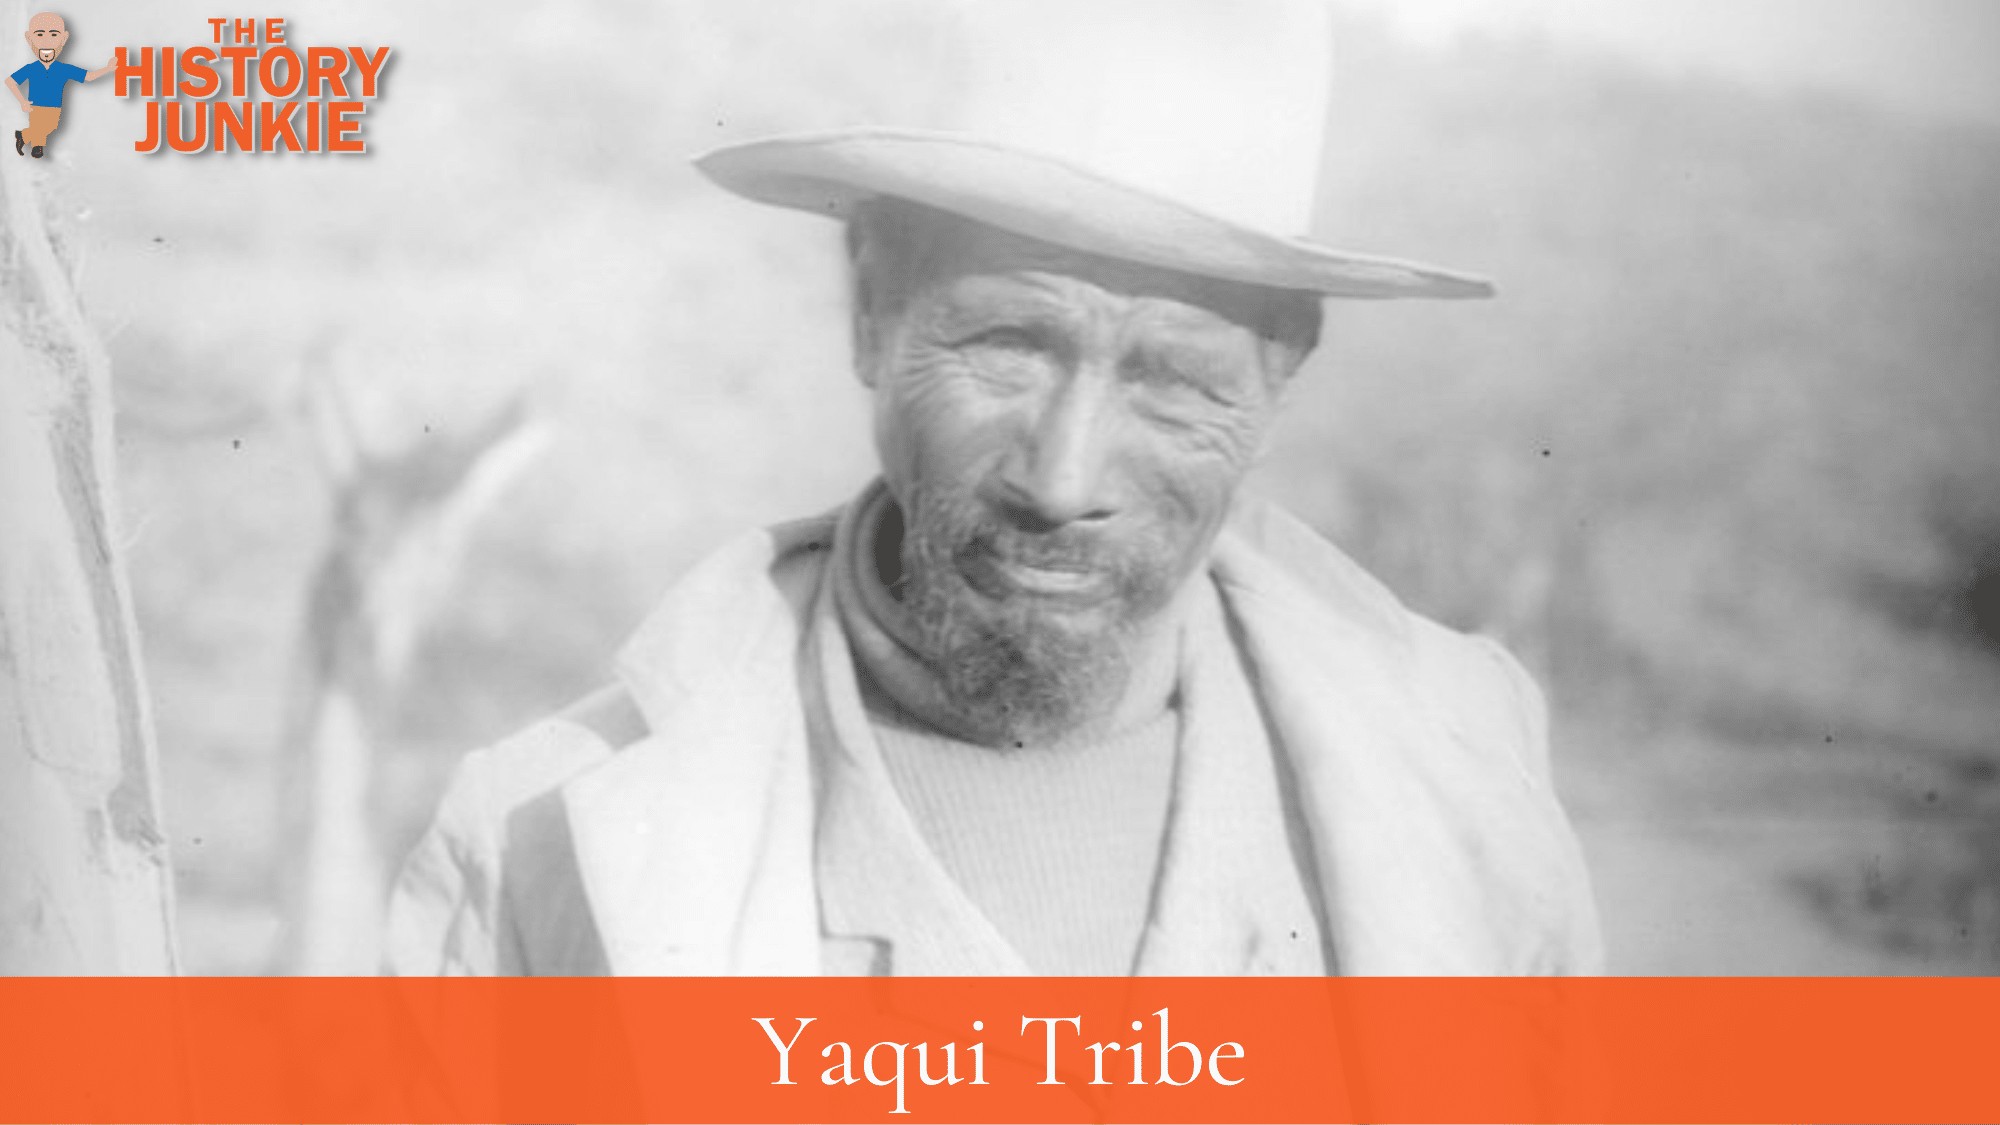 Yaqui Tribe